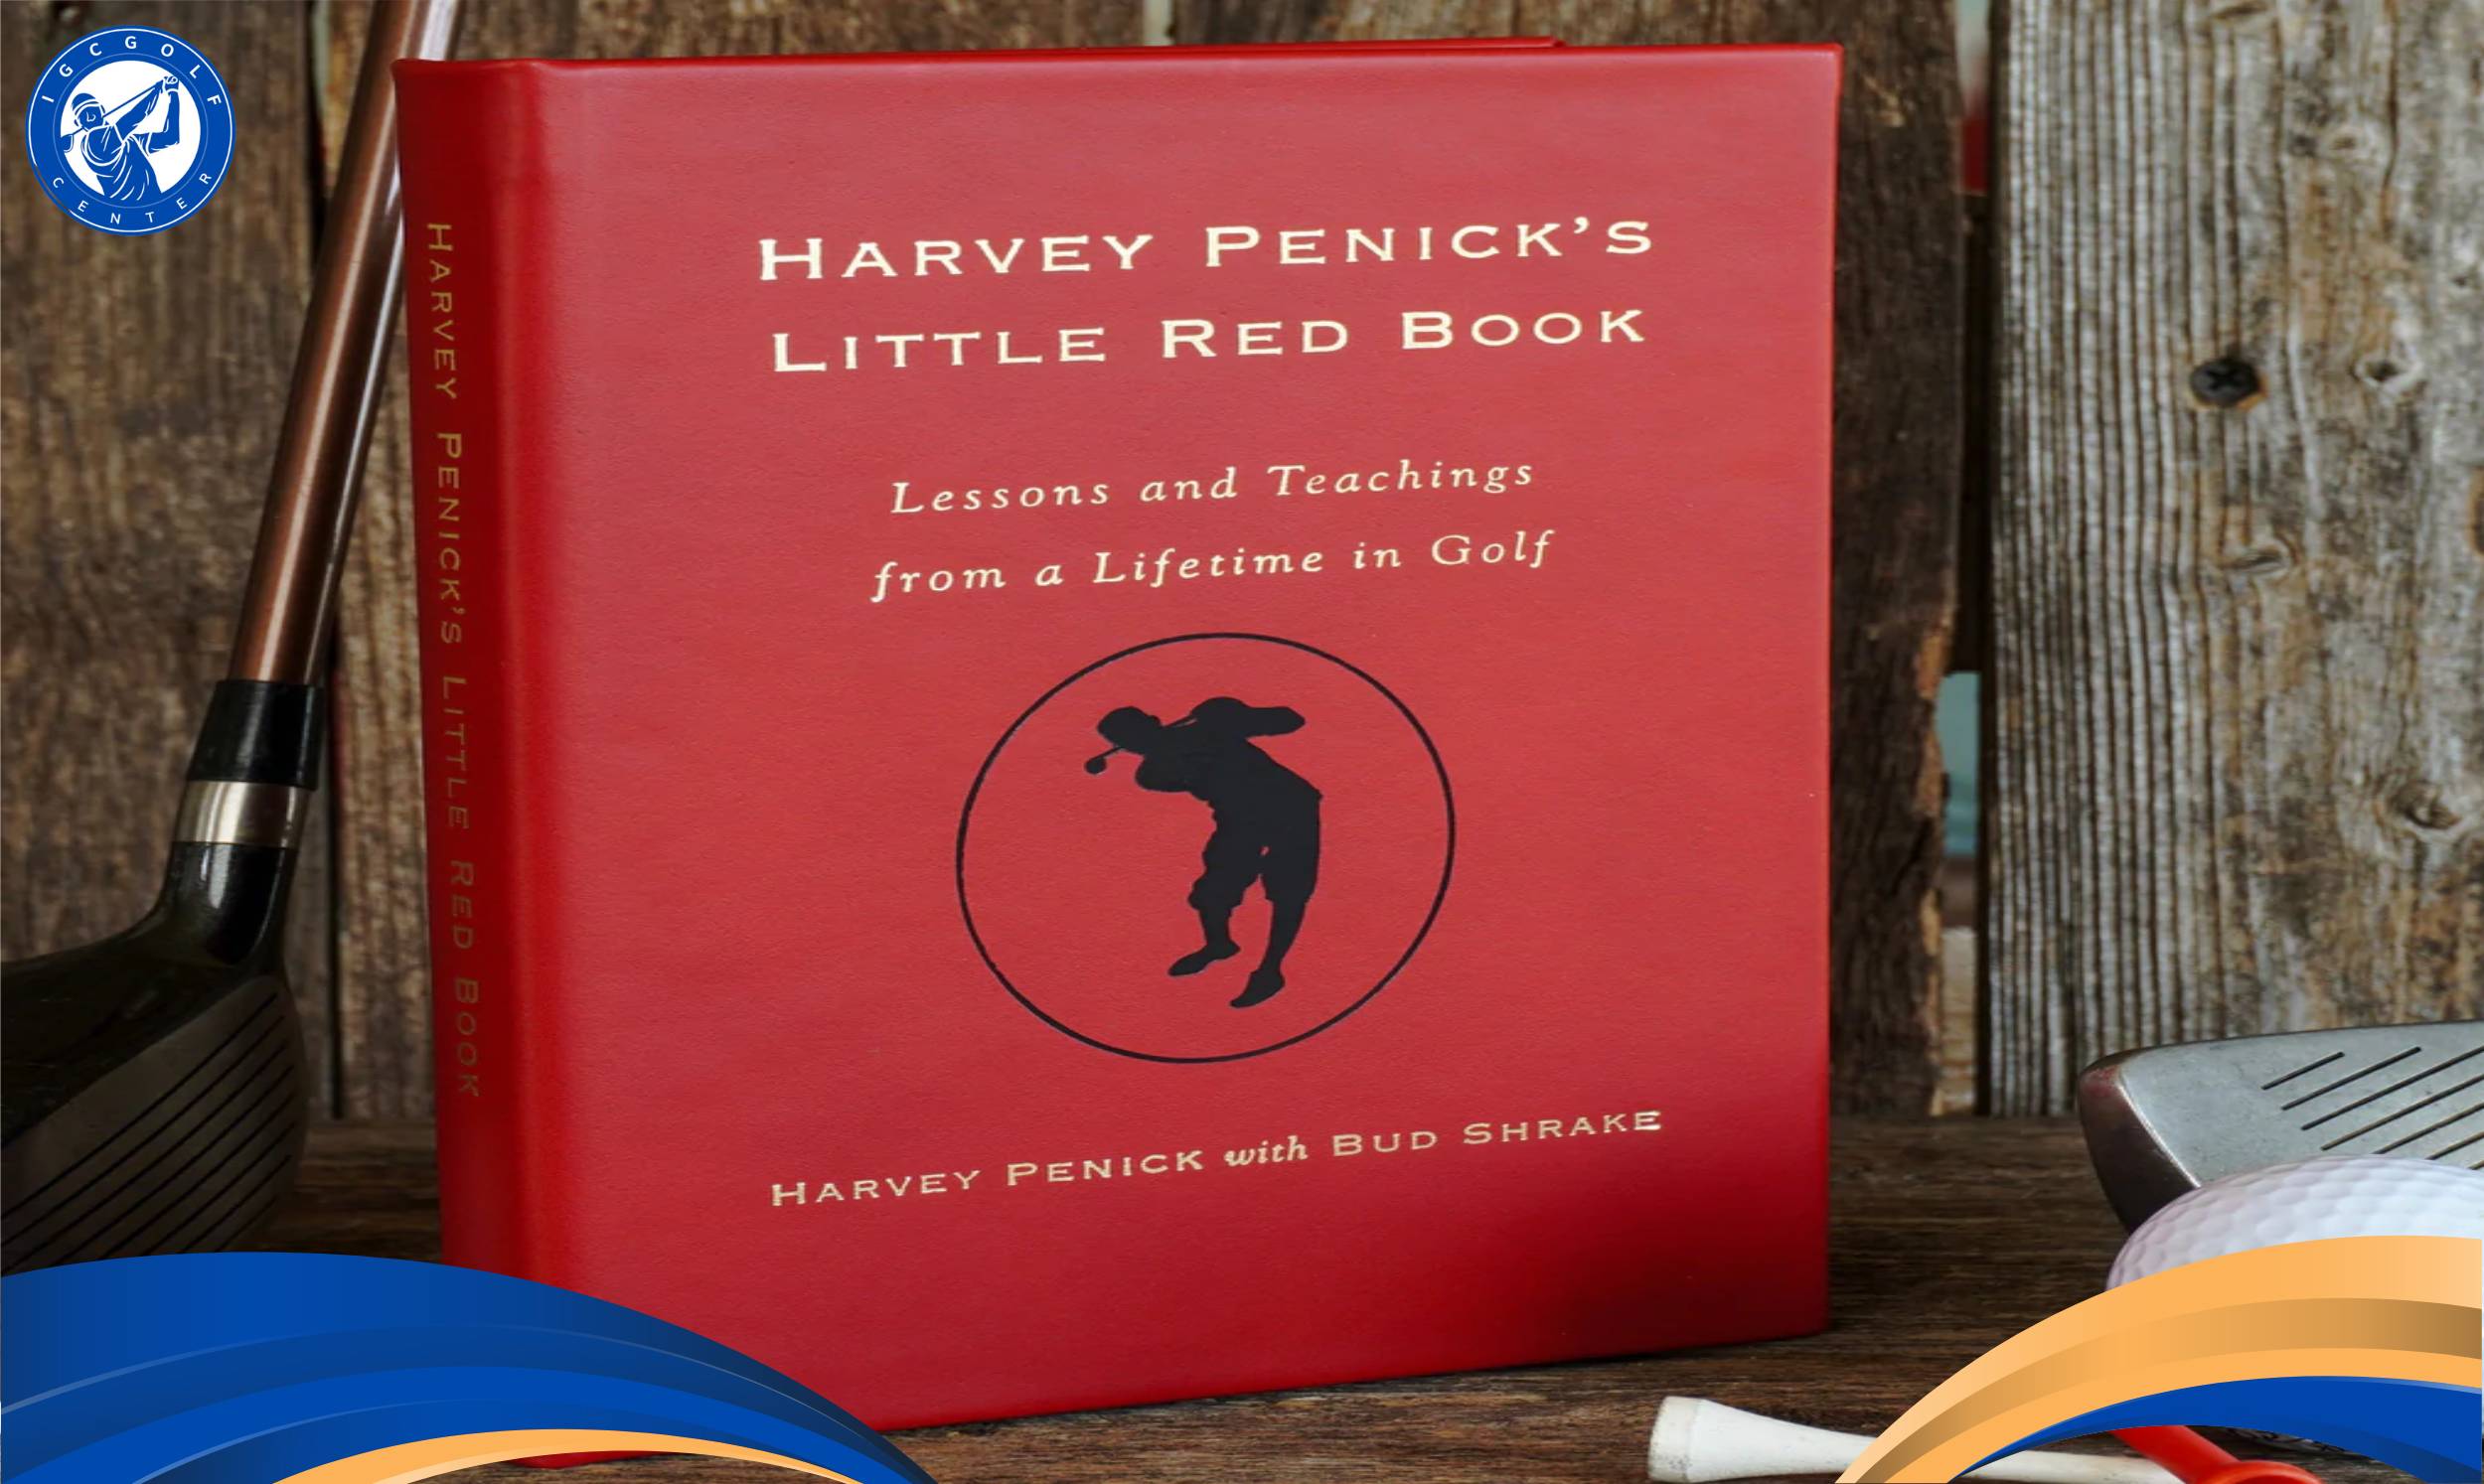 Harvey Penick’s Little Red Golf Book